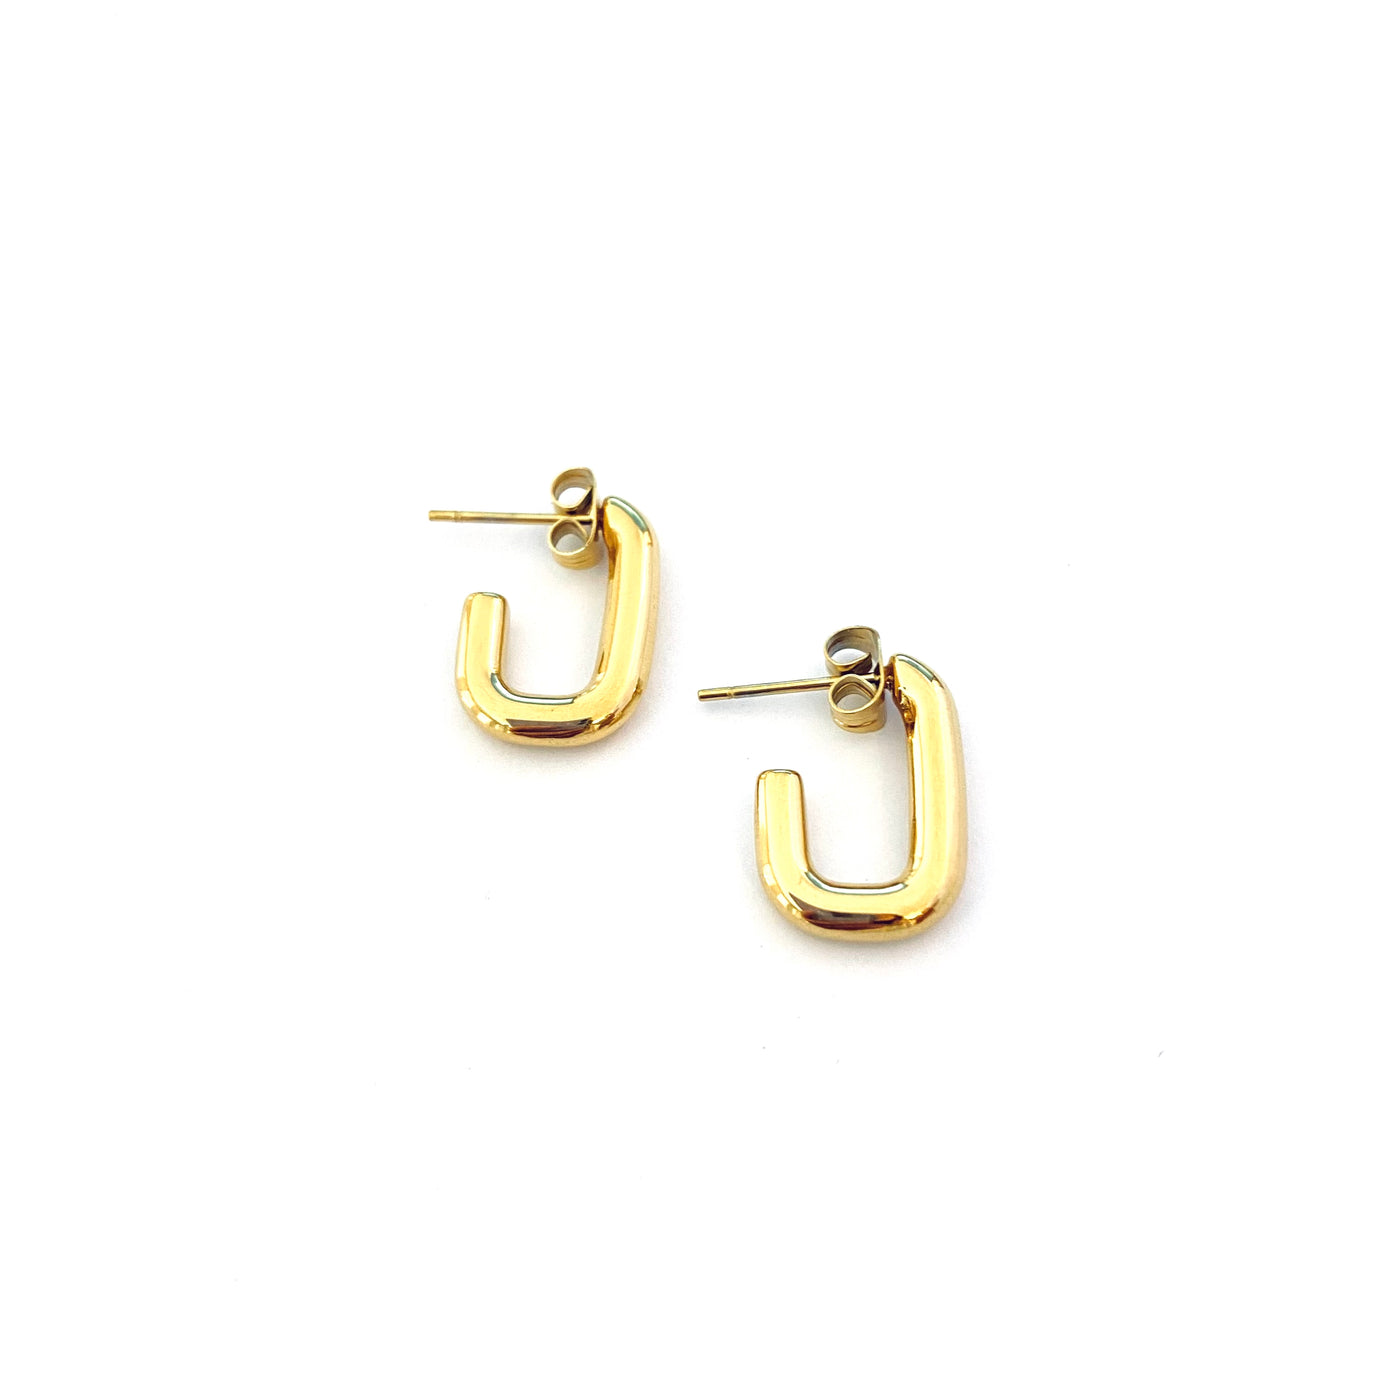 MATTY - Gold plated earrings